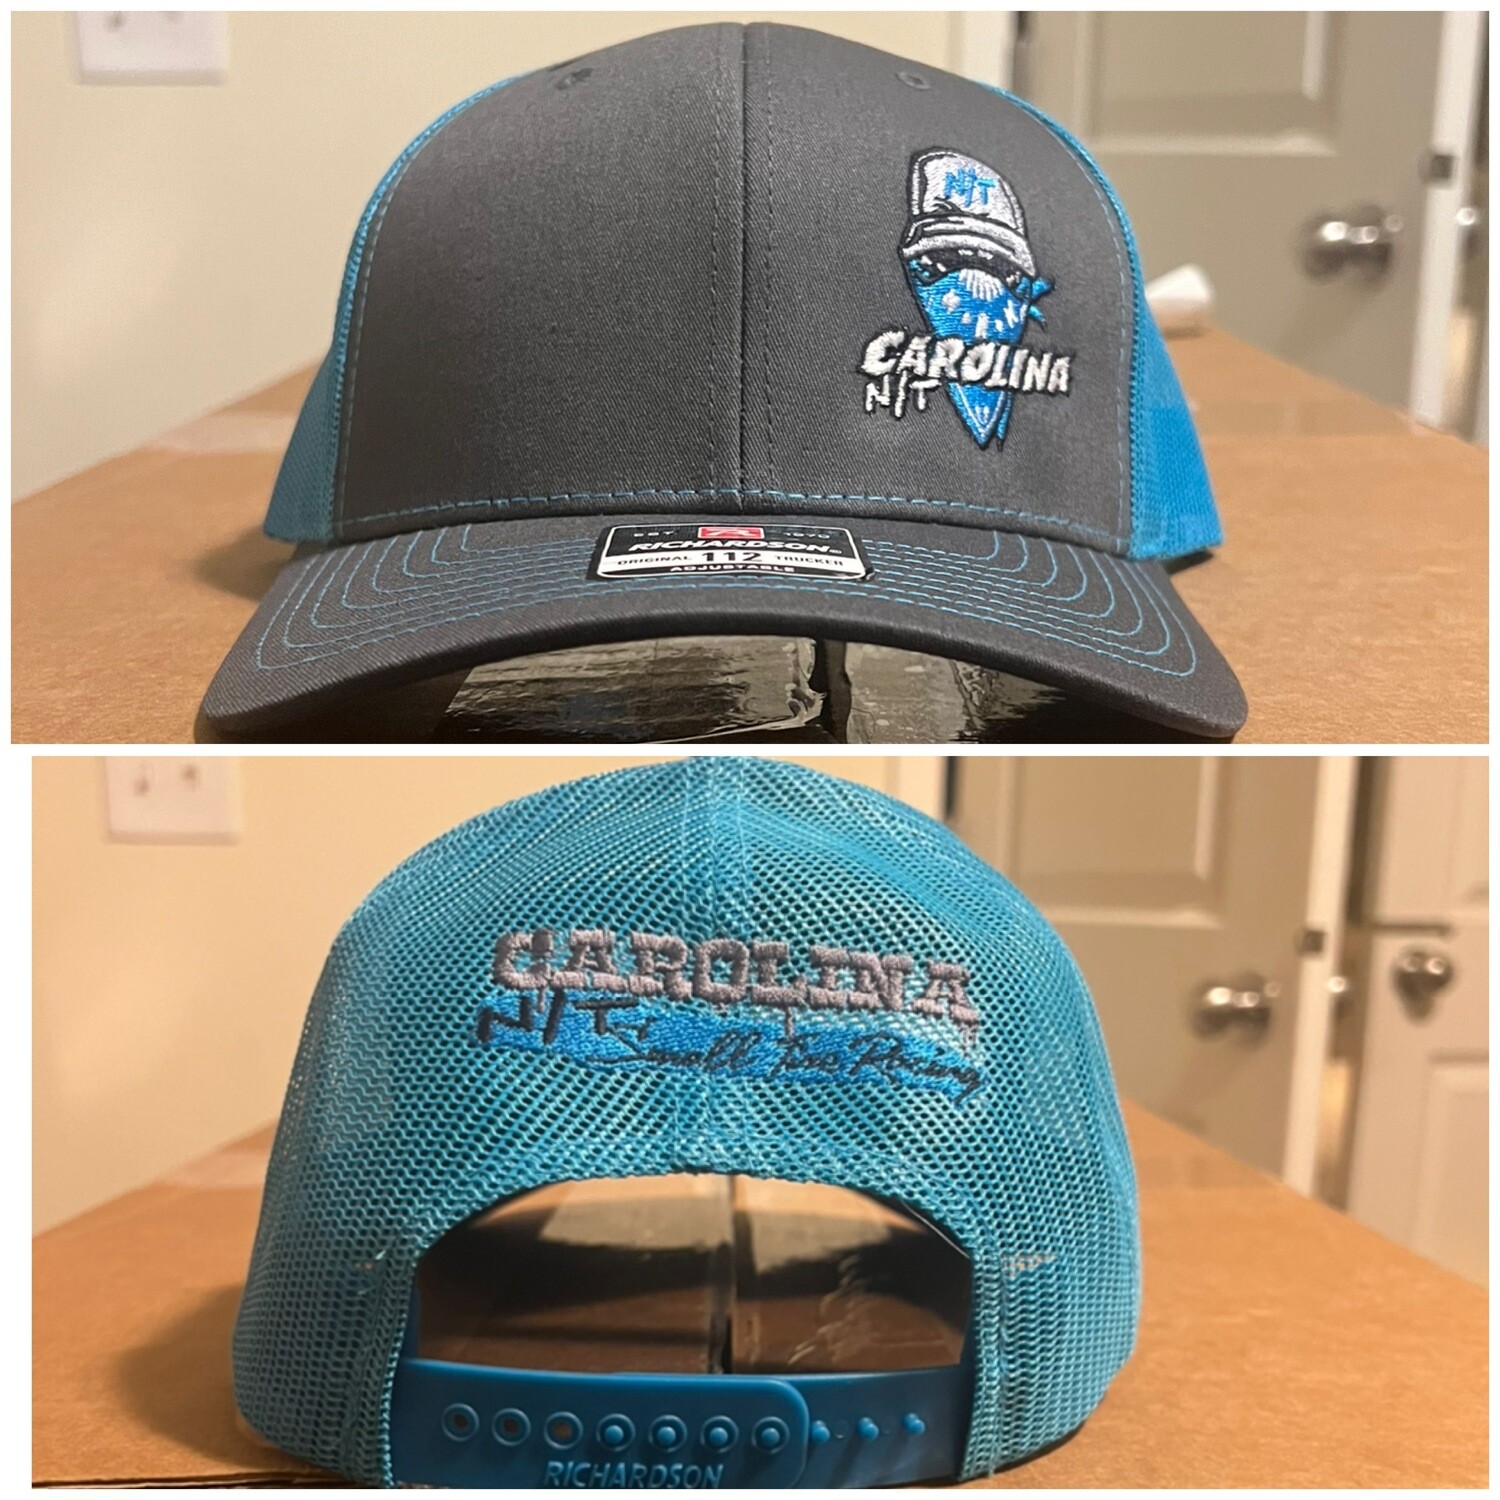 Carolina Blue/Grey Ball Cap bandit Trucker hat